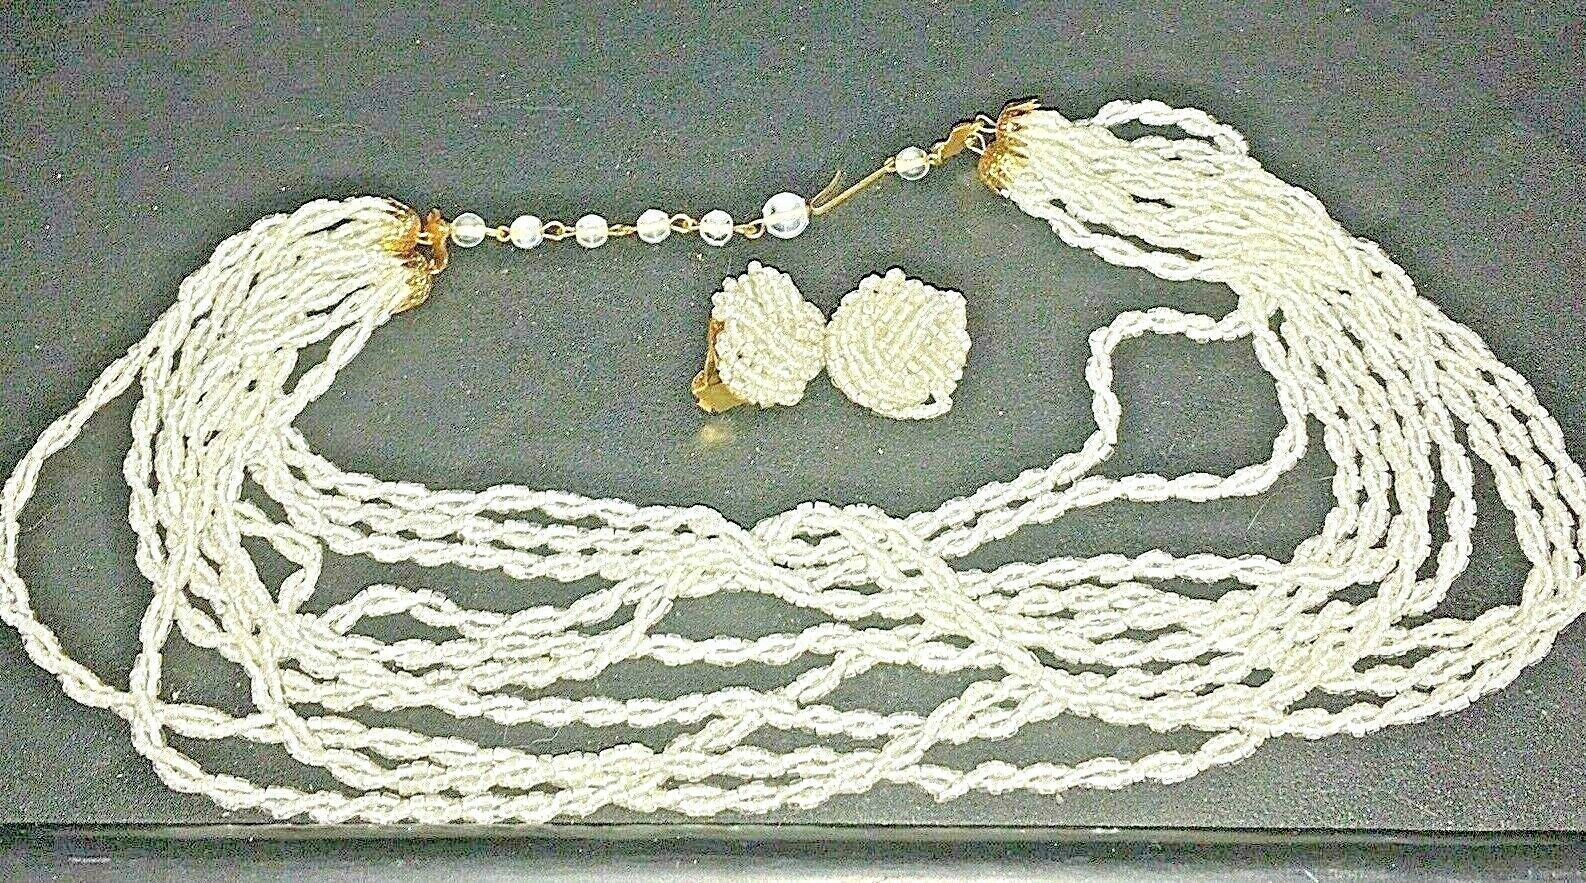 Vntg/Antq white seed beads necklace/clip earrings art glass - multi+++ strands